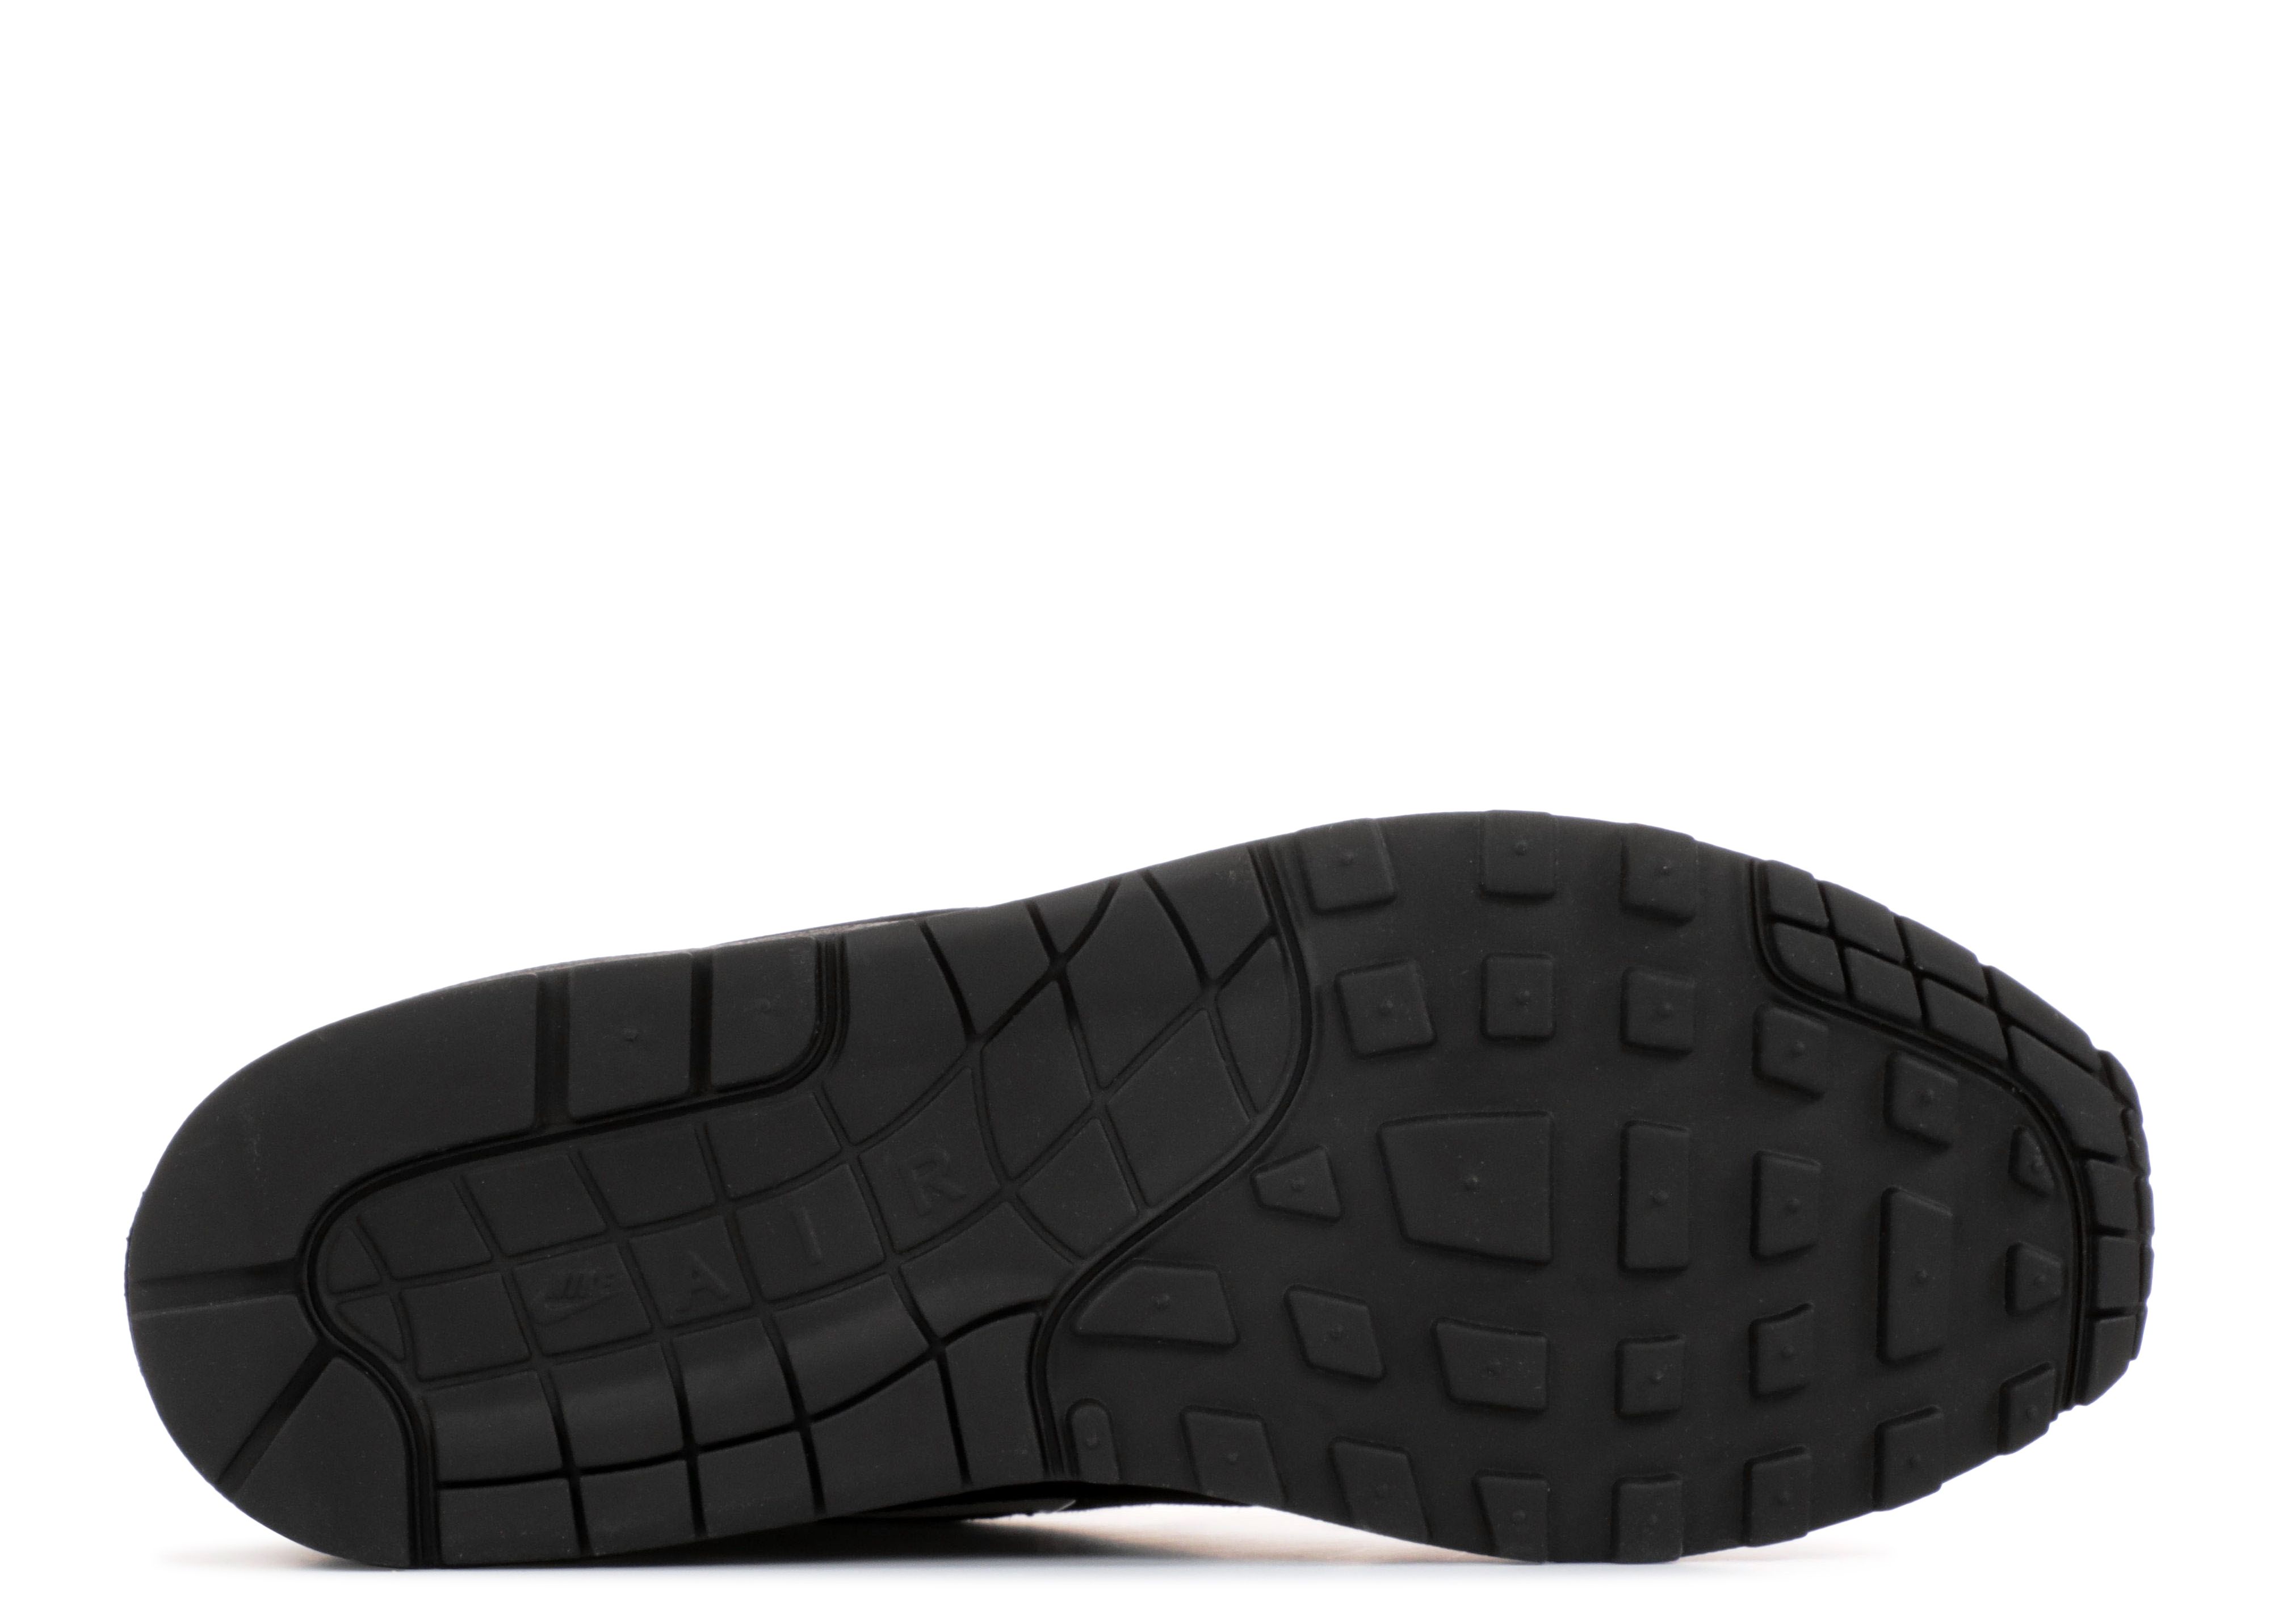 Doblez Loco flojo Air Max 1 Premium SC Jewel 'Triple Black' - Nike - 918354 005 - black/black  | Flight Club